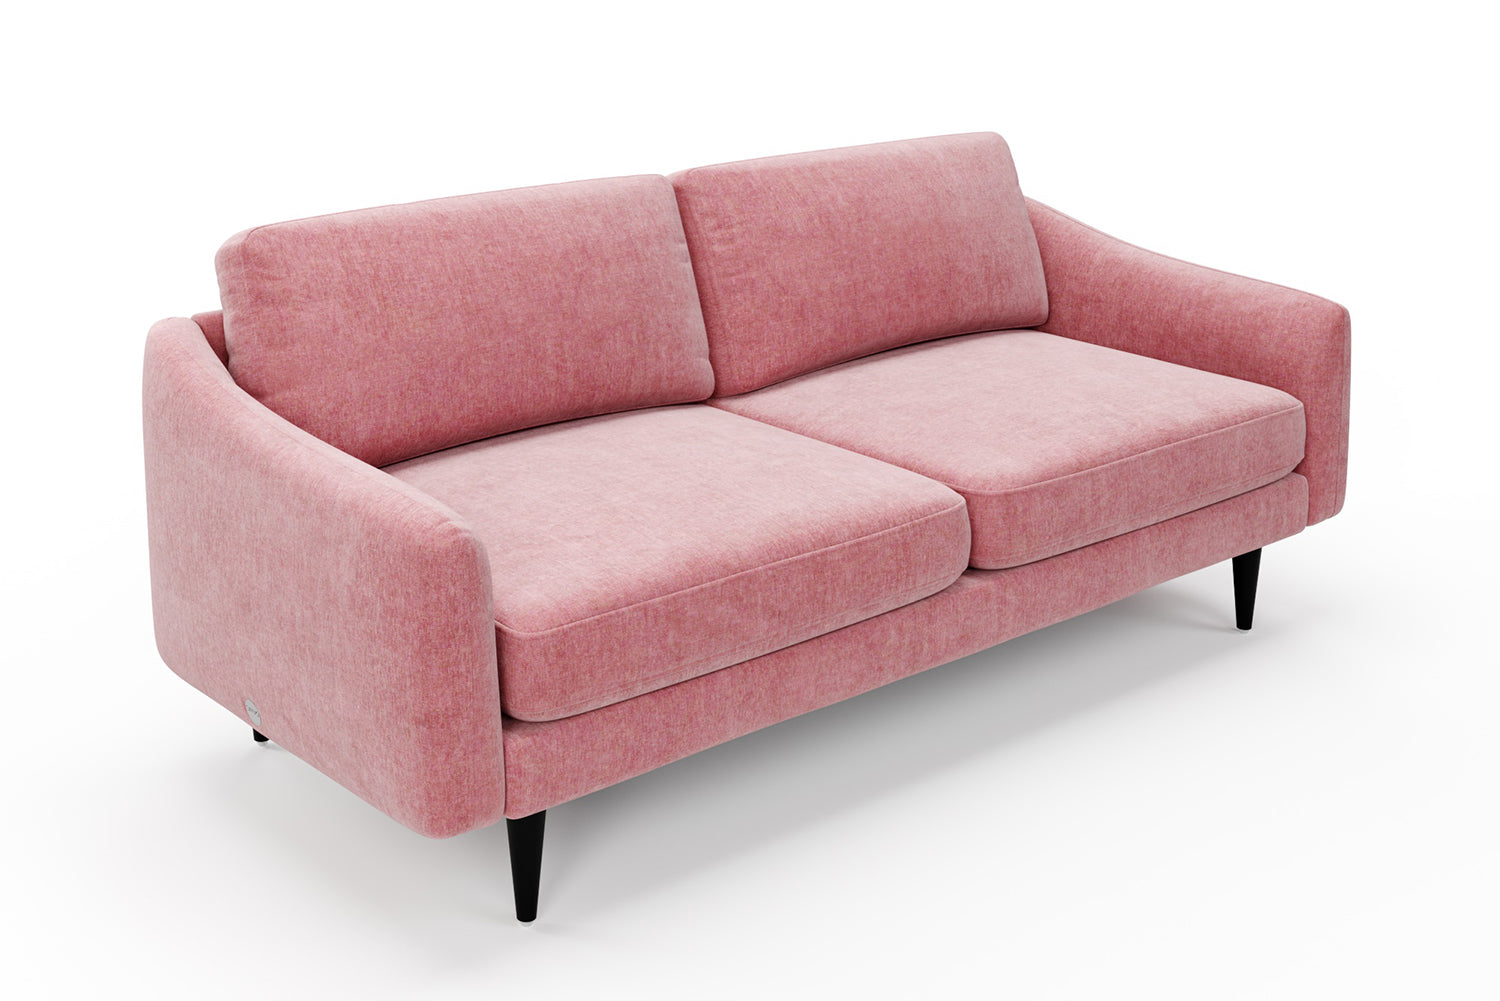 SNUG | The Rebel 3 Seater Sofa in Blush Coral